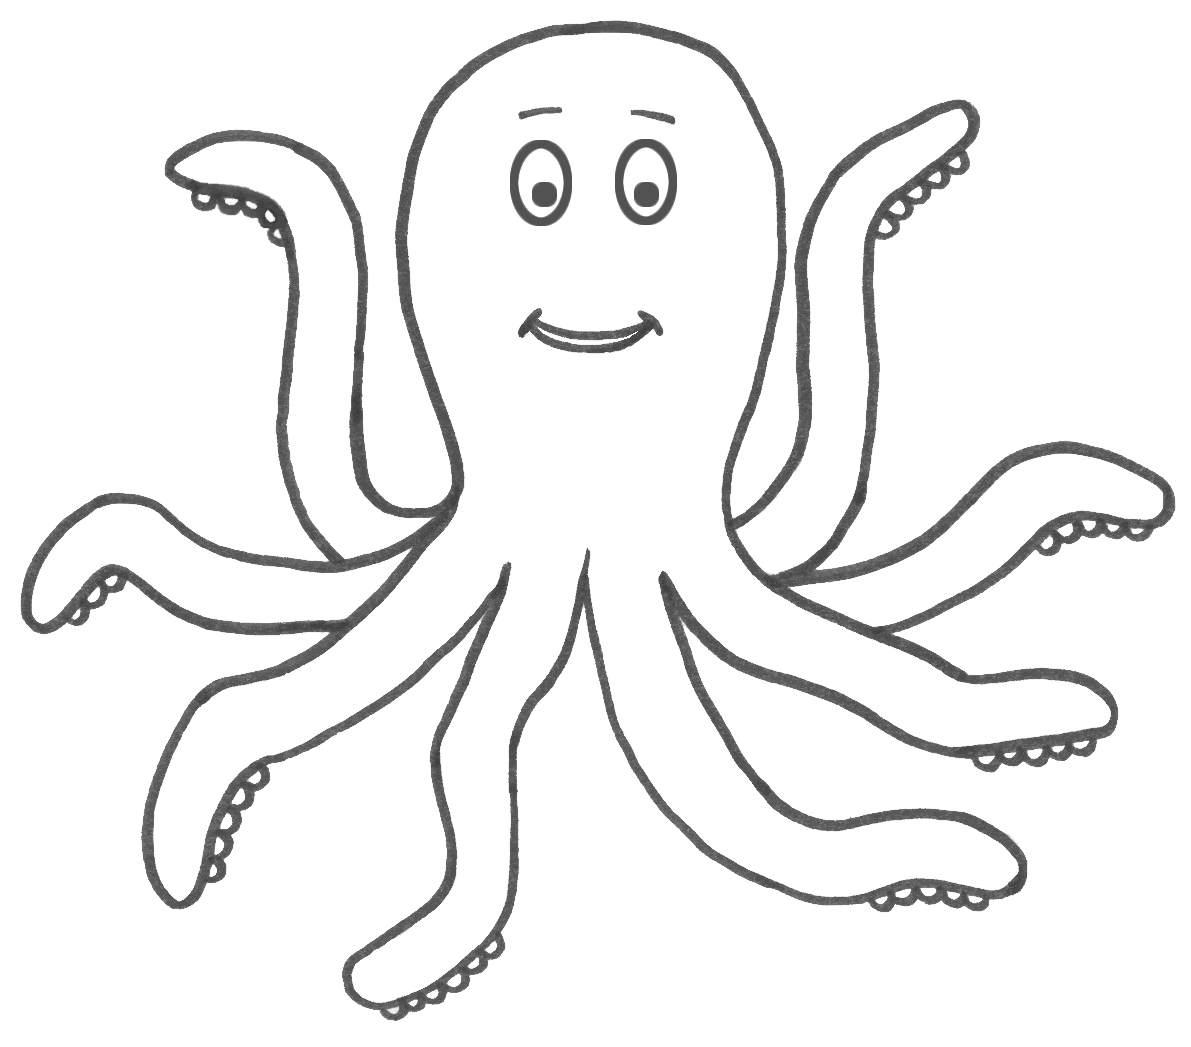 Octopus Drawing Images  Free Download on Freepik